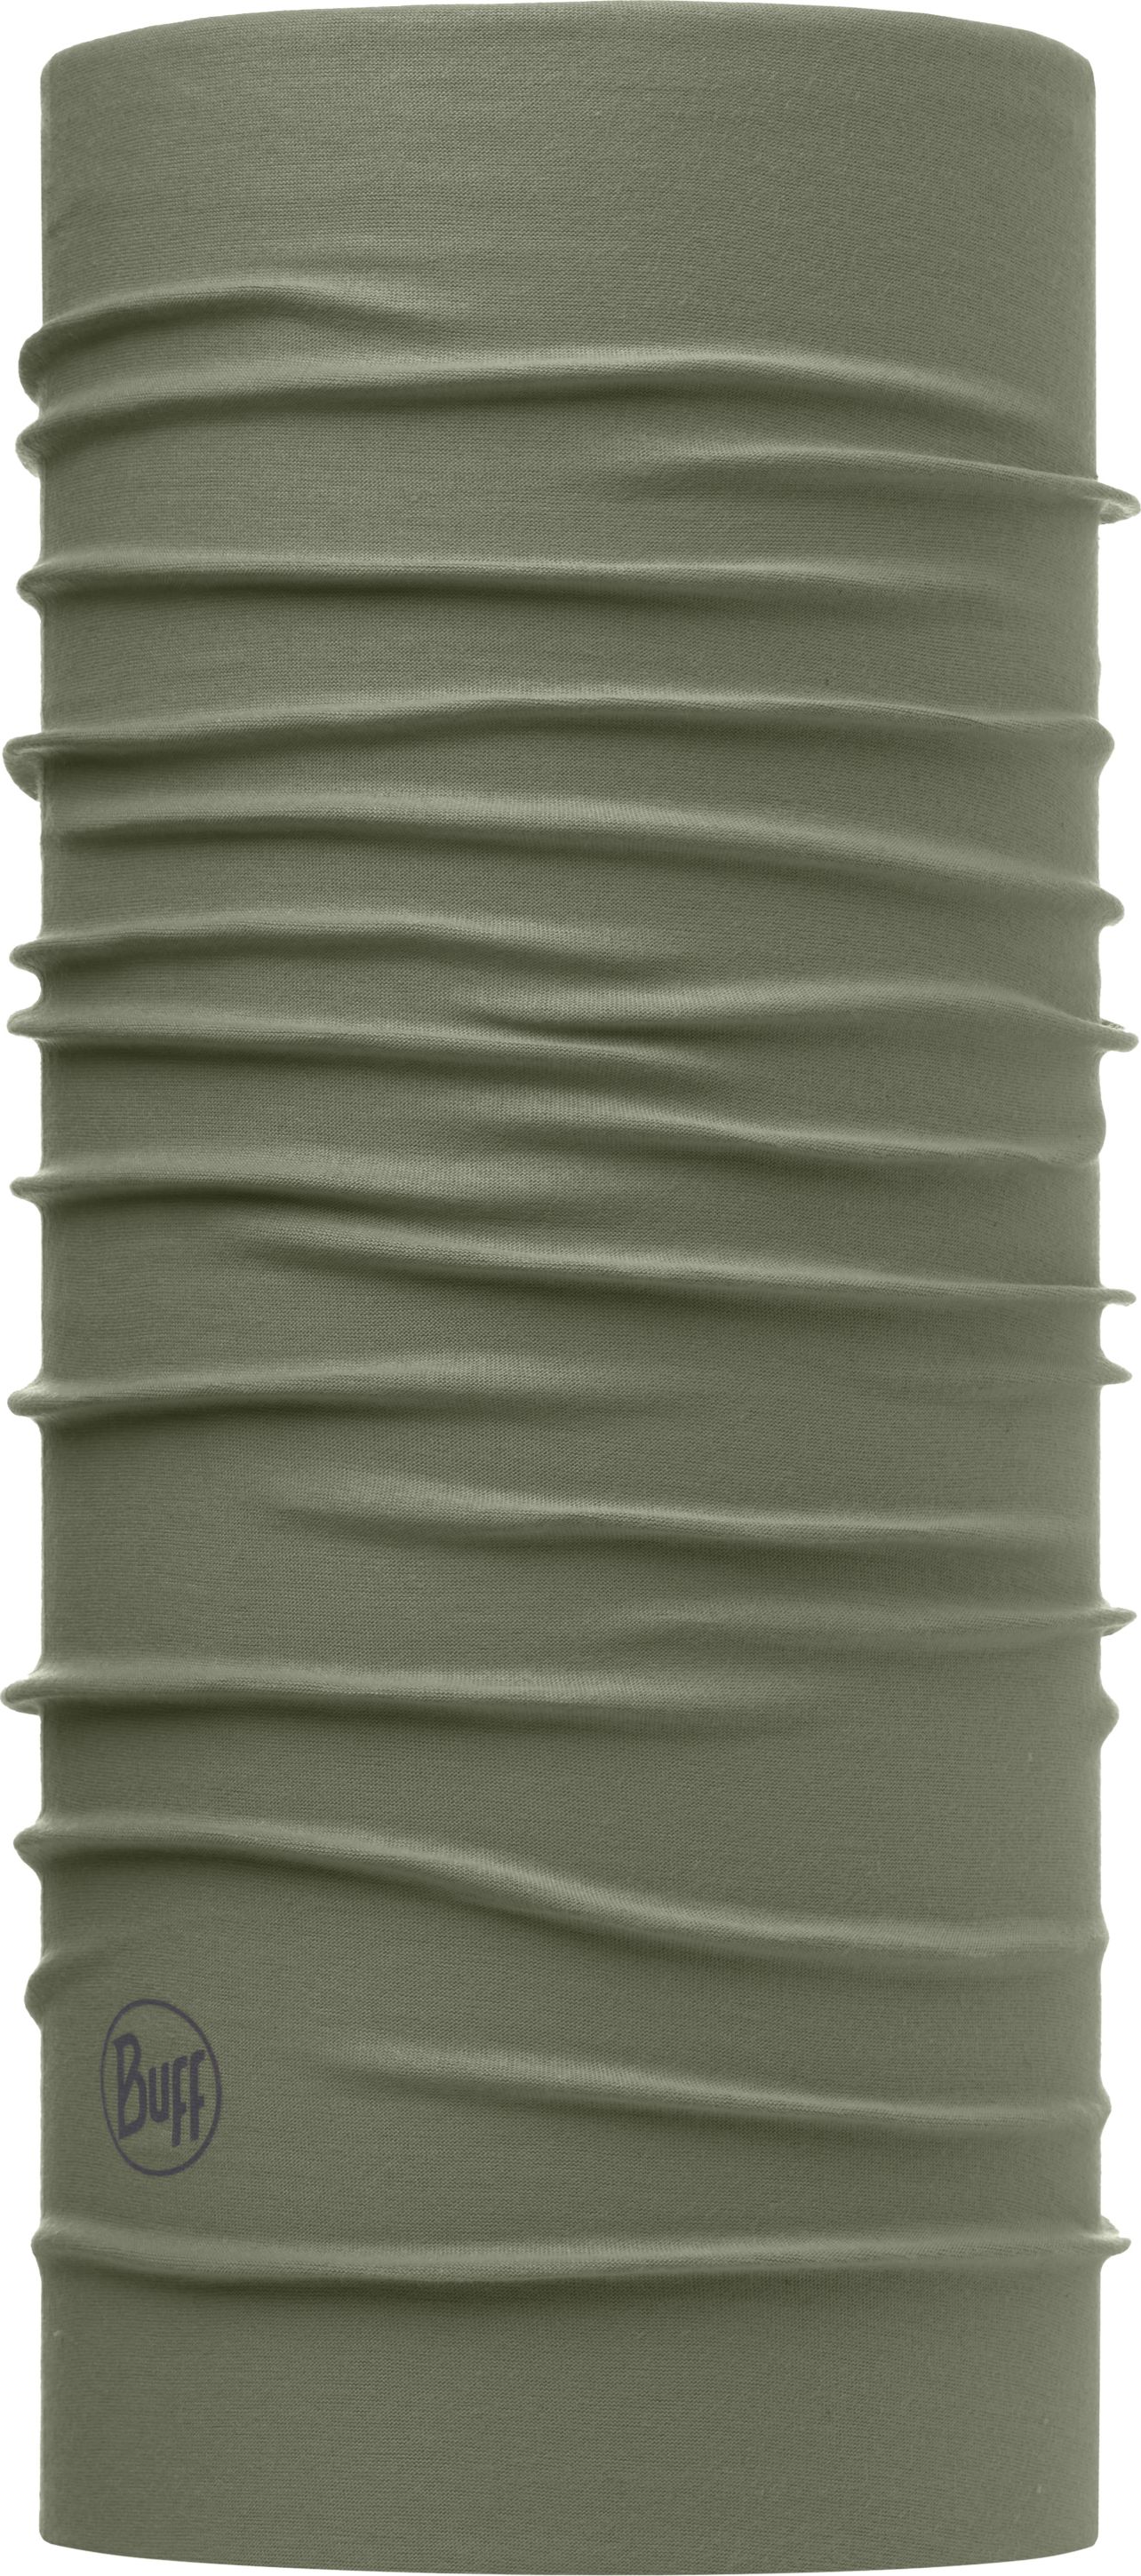 Бандана Buff UV Insect Shield Protection Solid Dusty Olive, цвет: оливковый. 111427.836.10.00. Размер универсальный